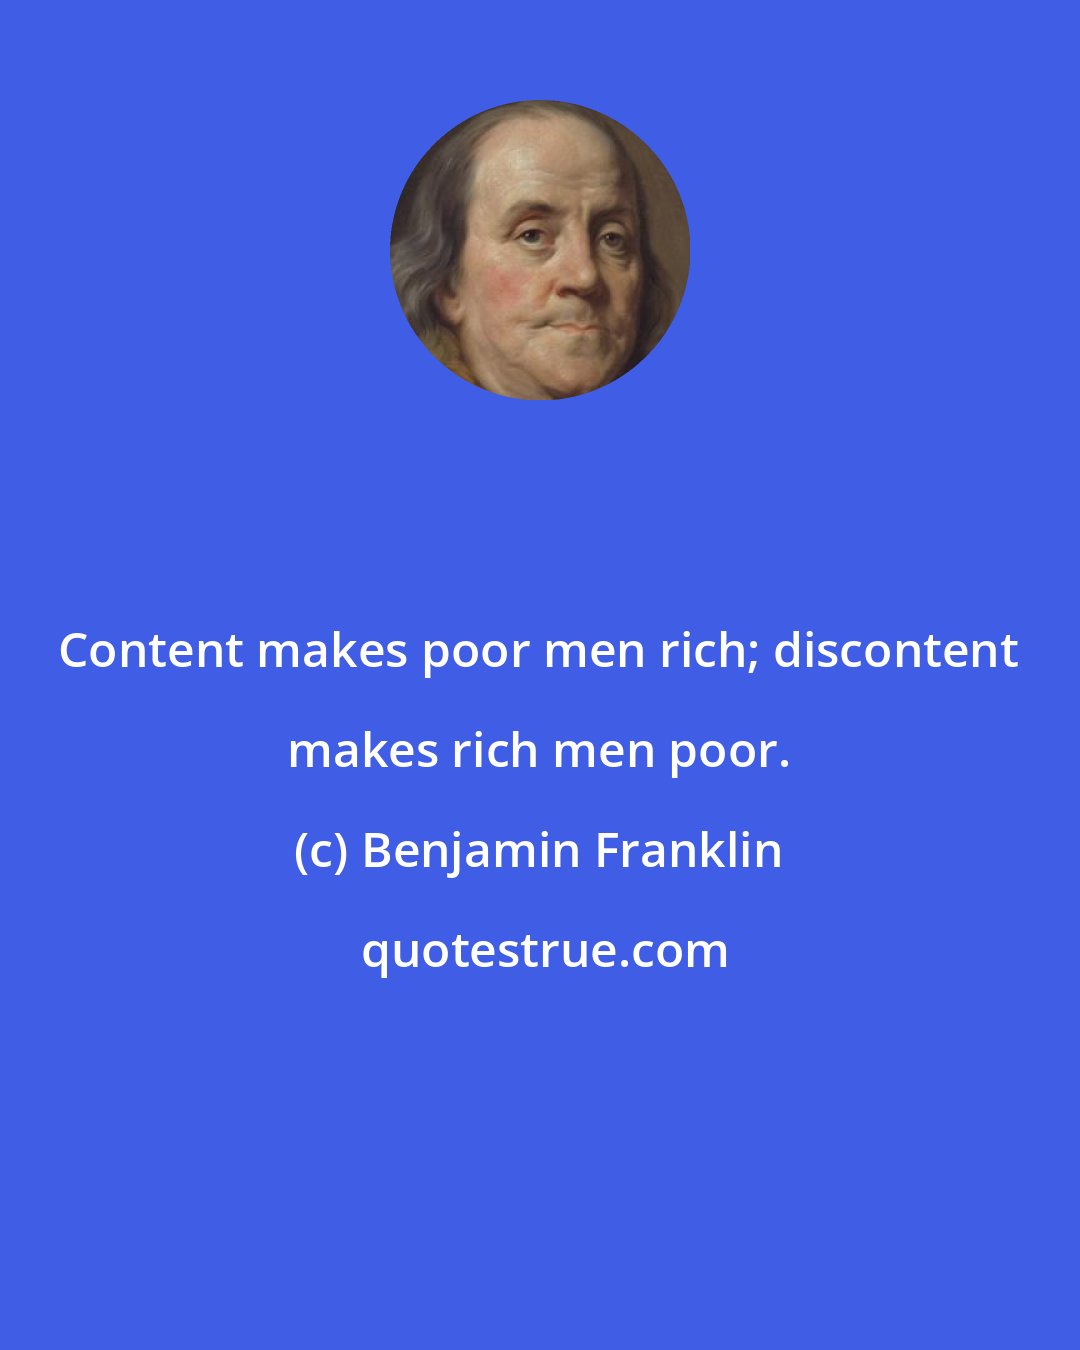 Benjamin Franklin: Content makes poor men rich; discontent makes rich men poor.